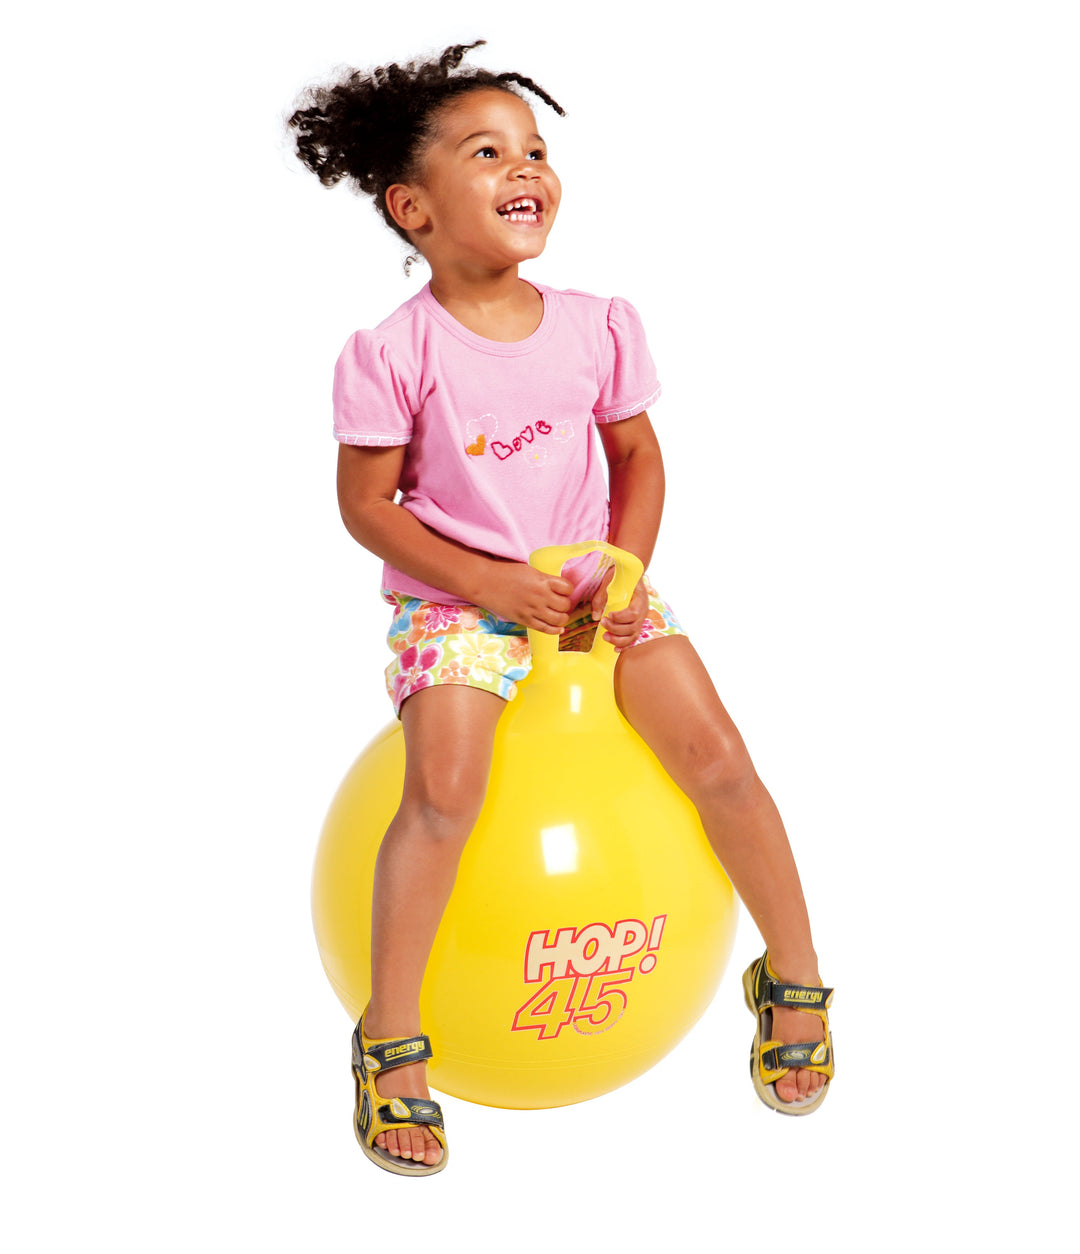 Little girl hopping on the yellow Hop 45 ball